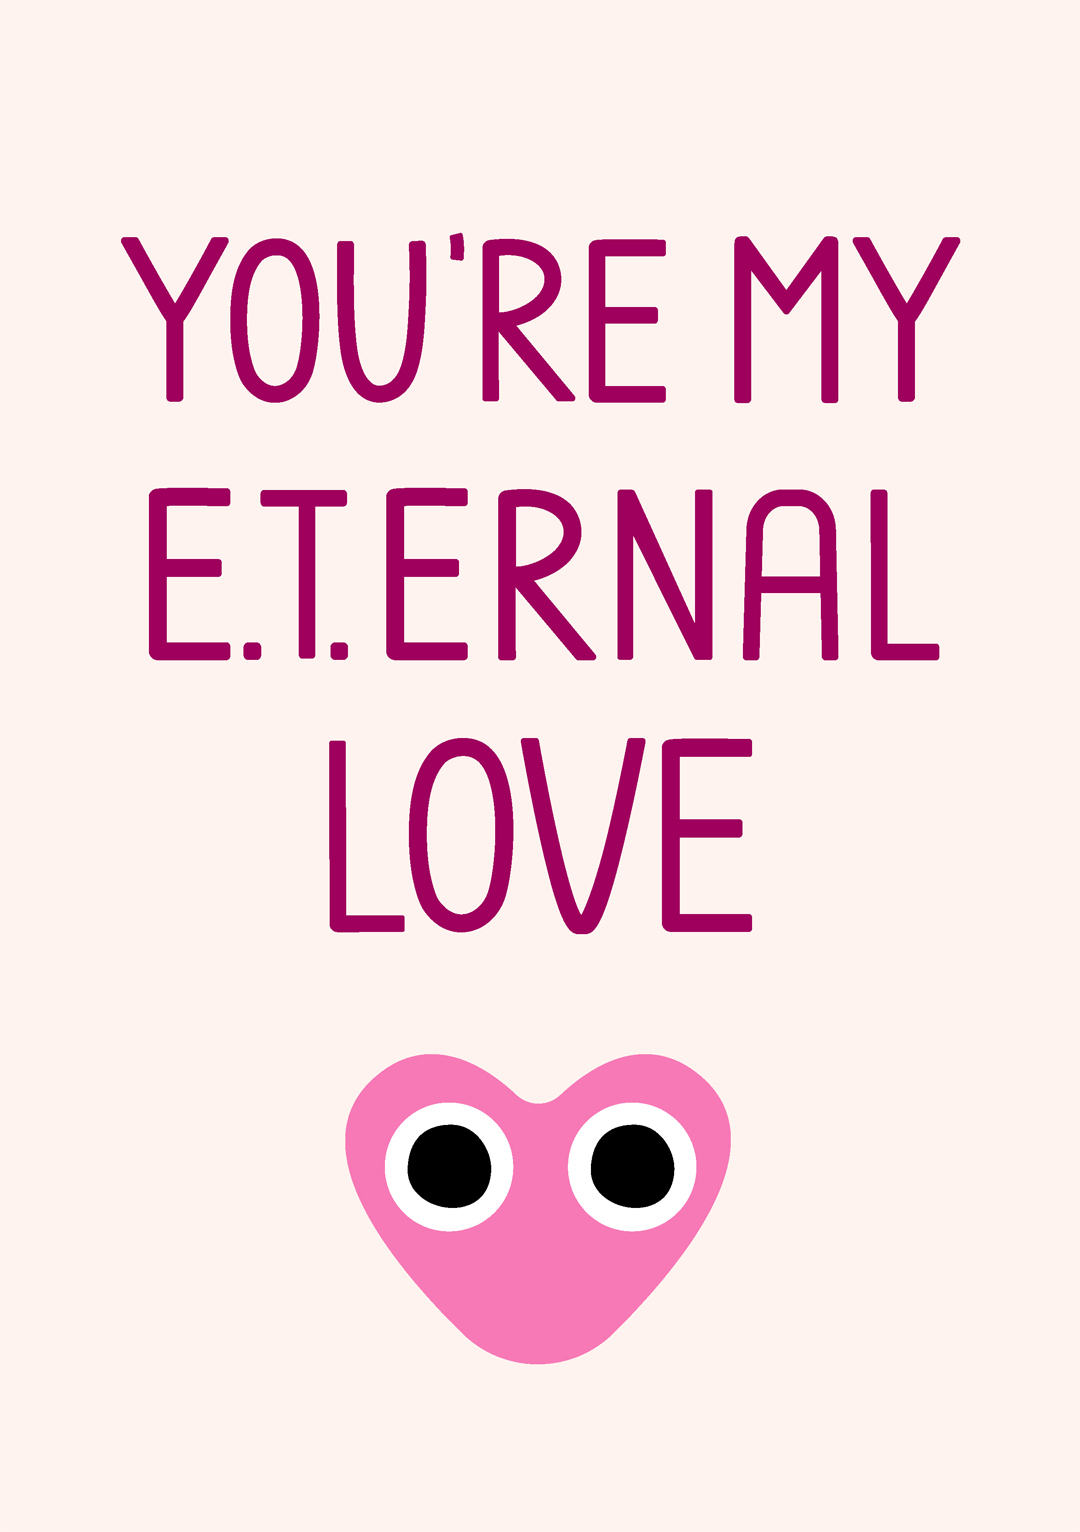 eternal love greeting card